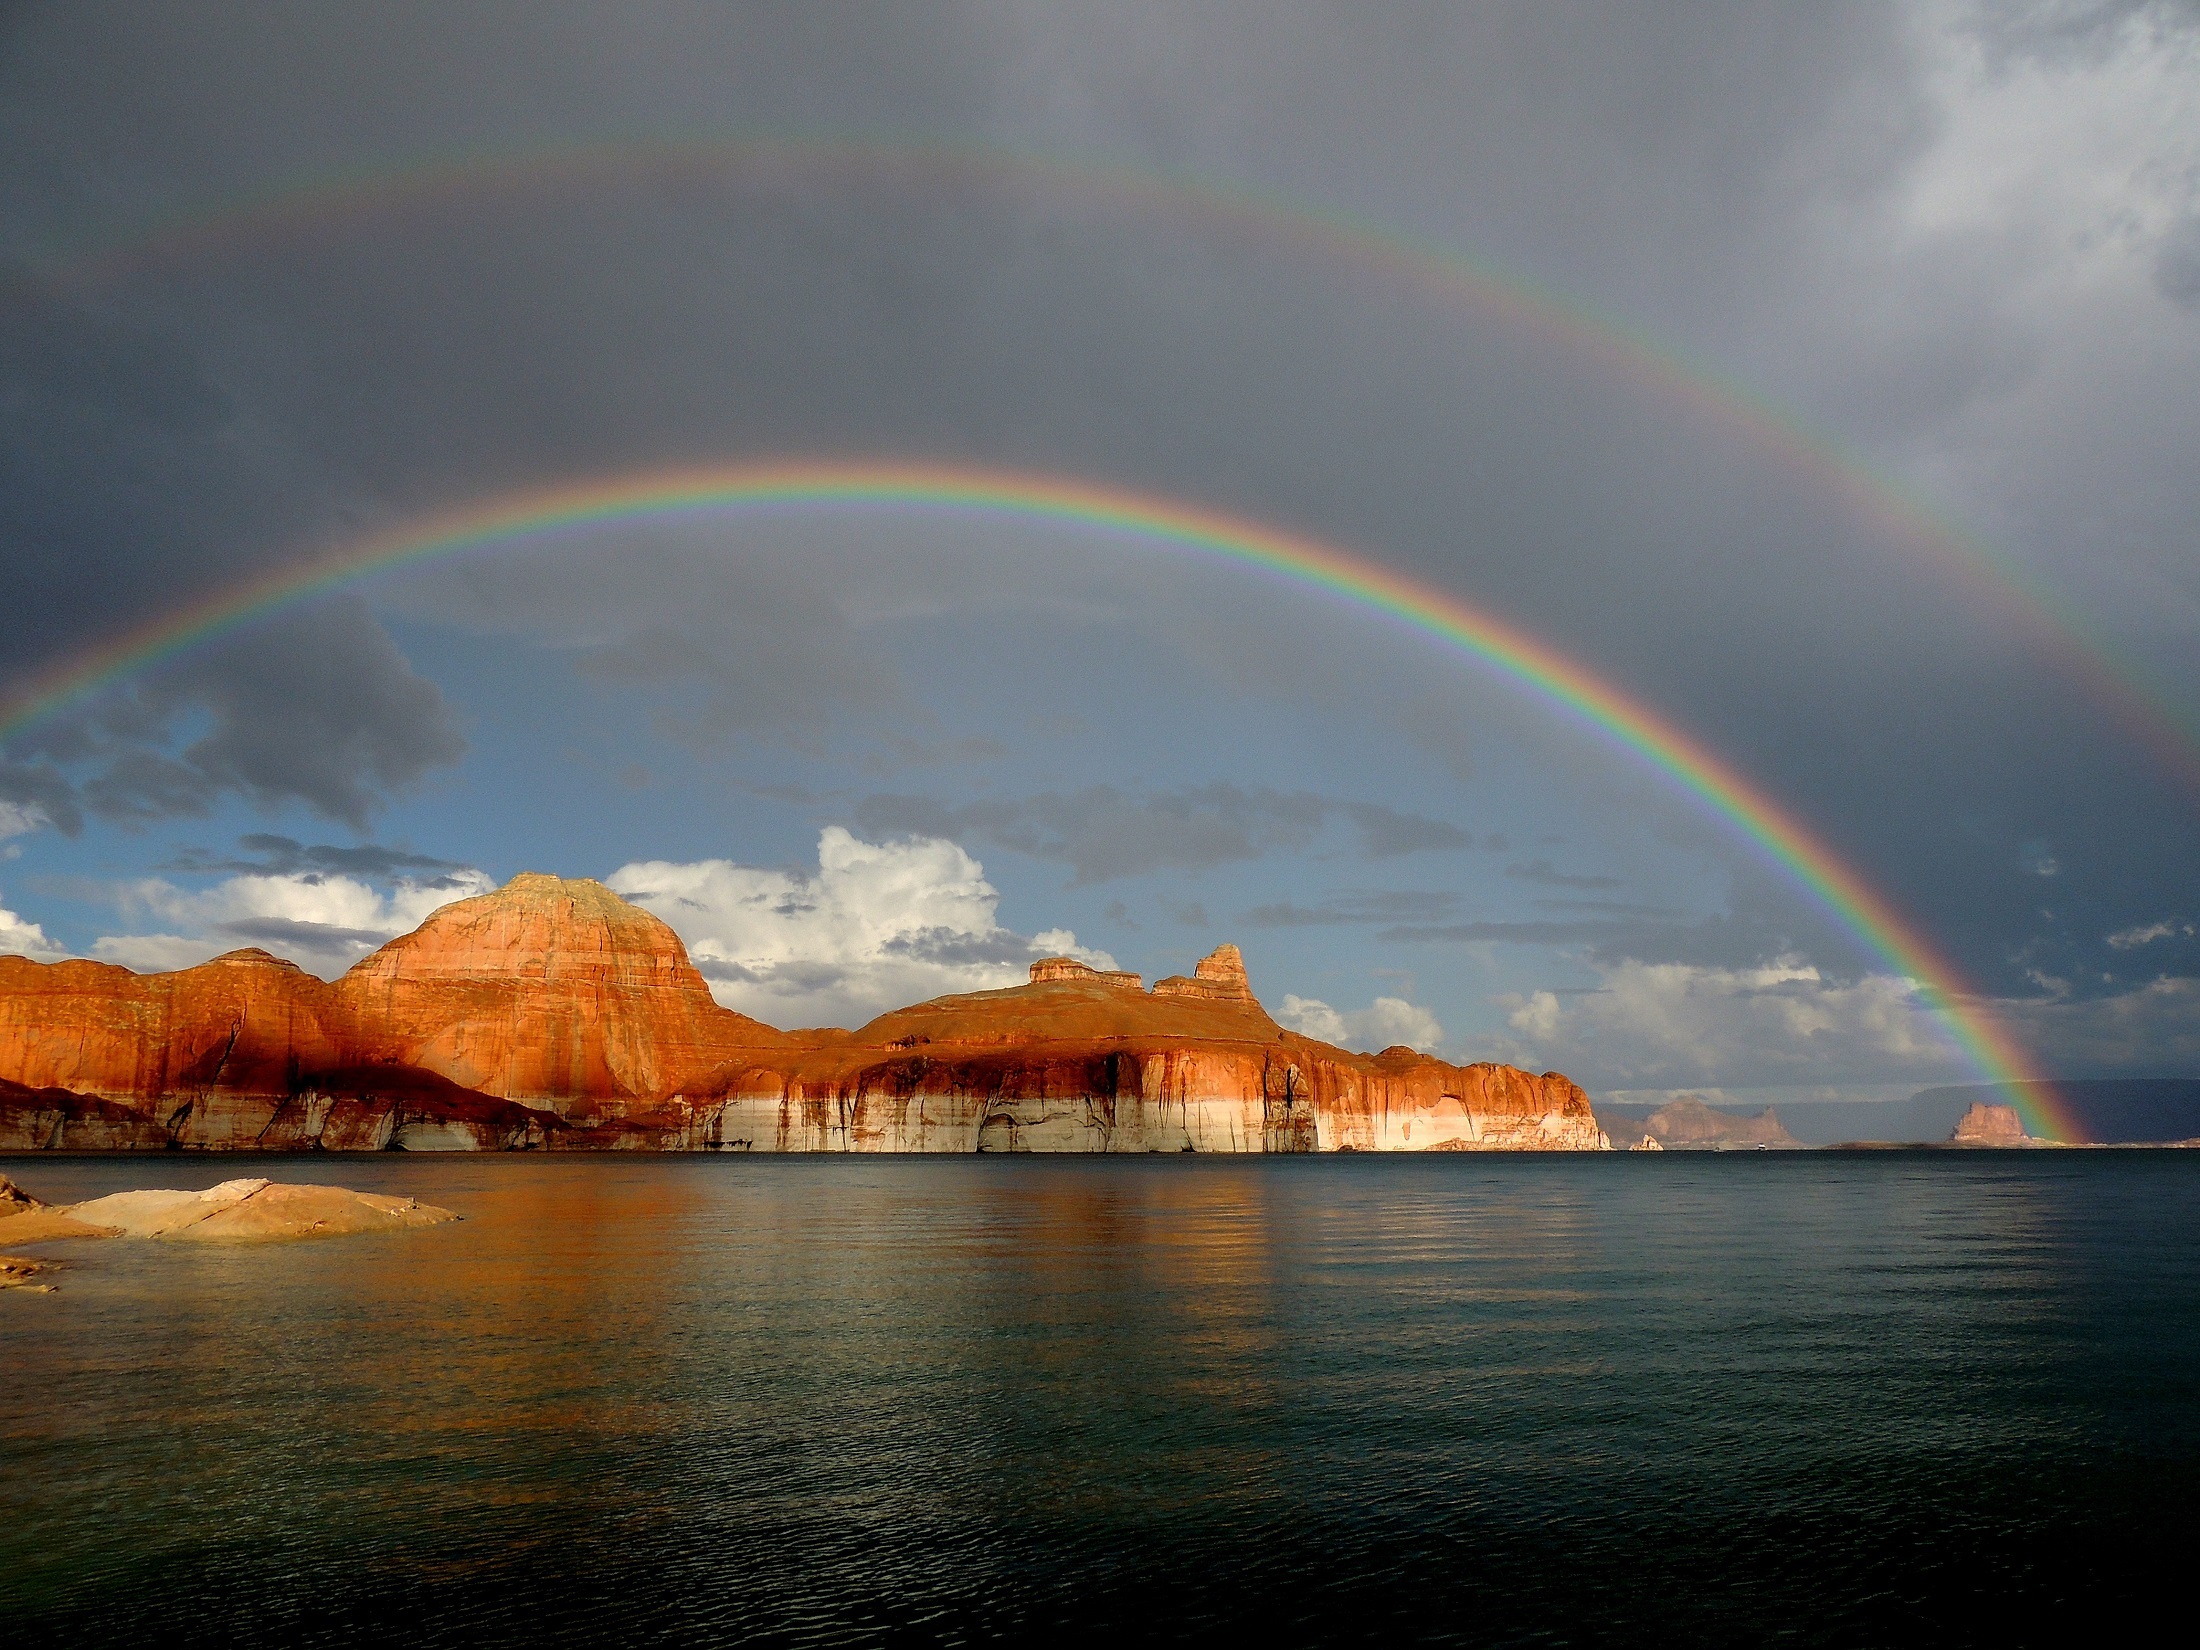 Rainbow formation photo